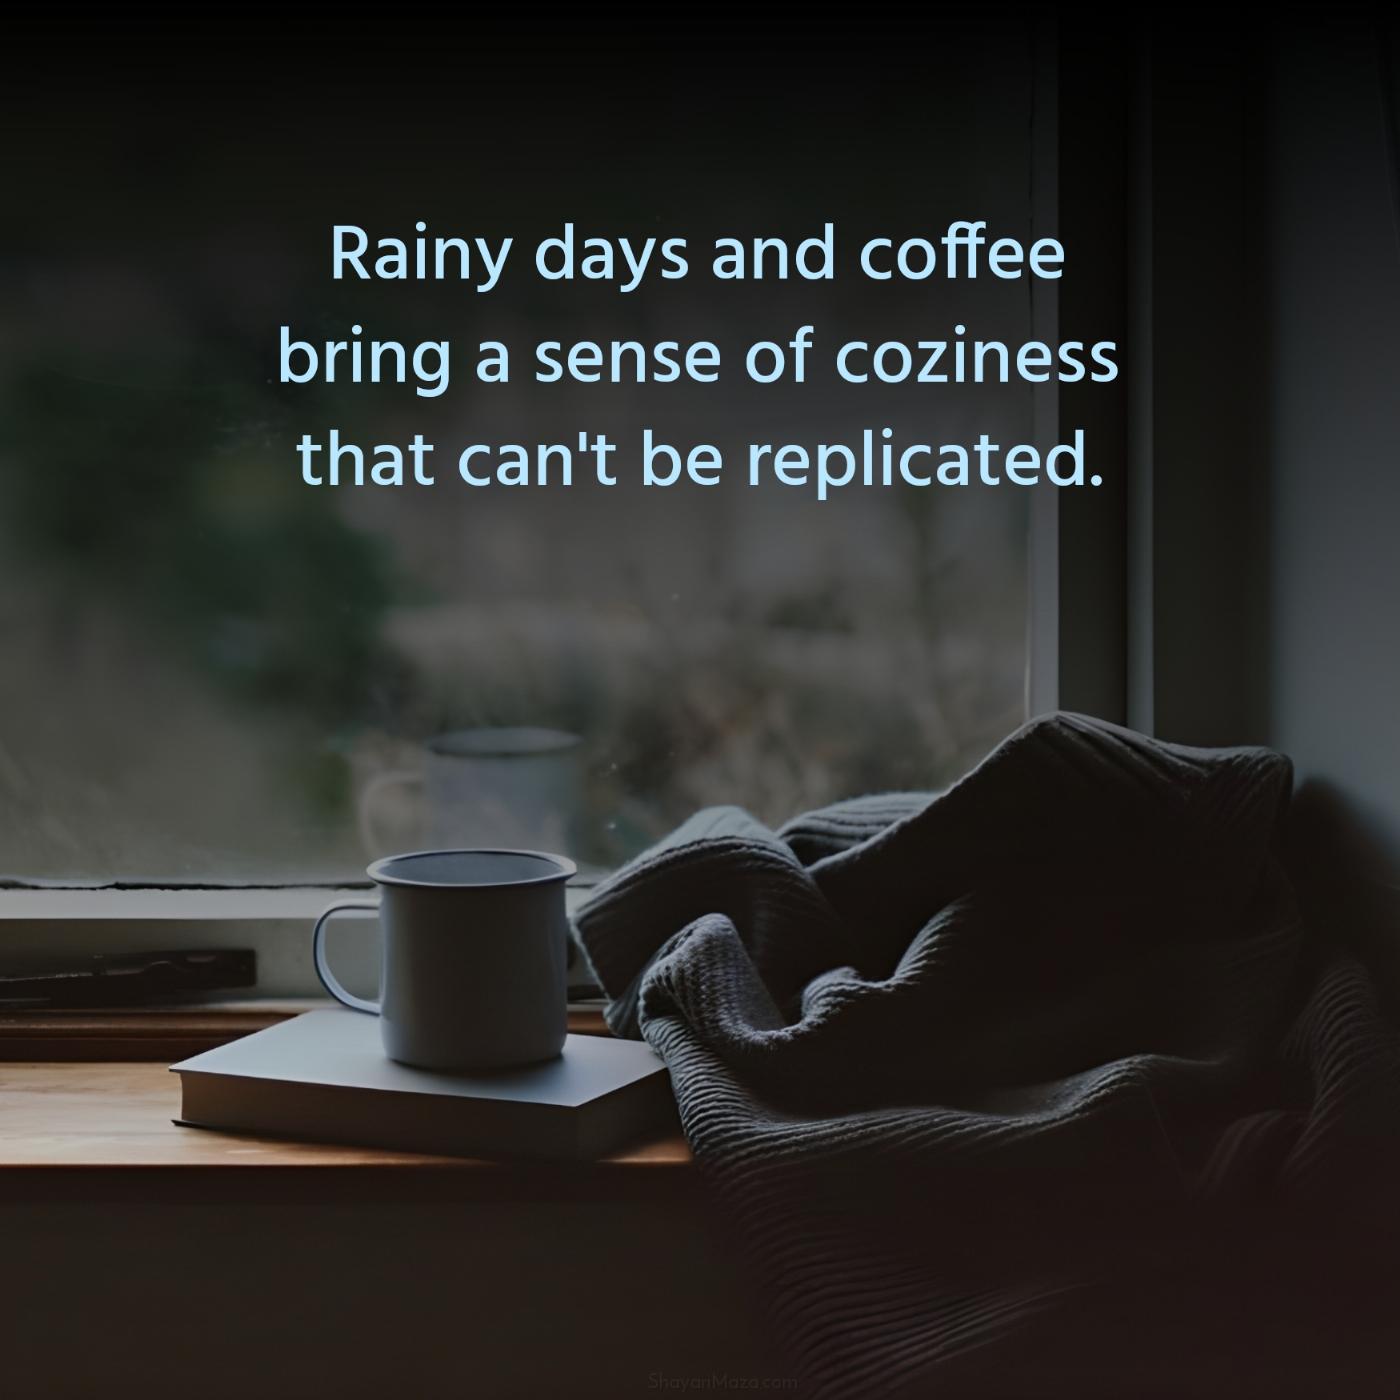 Rainy days and coffee bring a sense of coziness